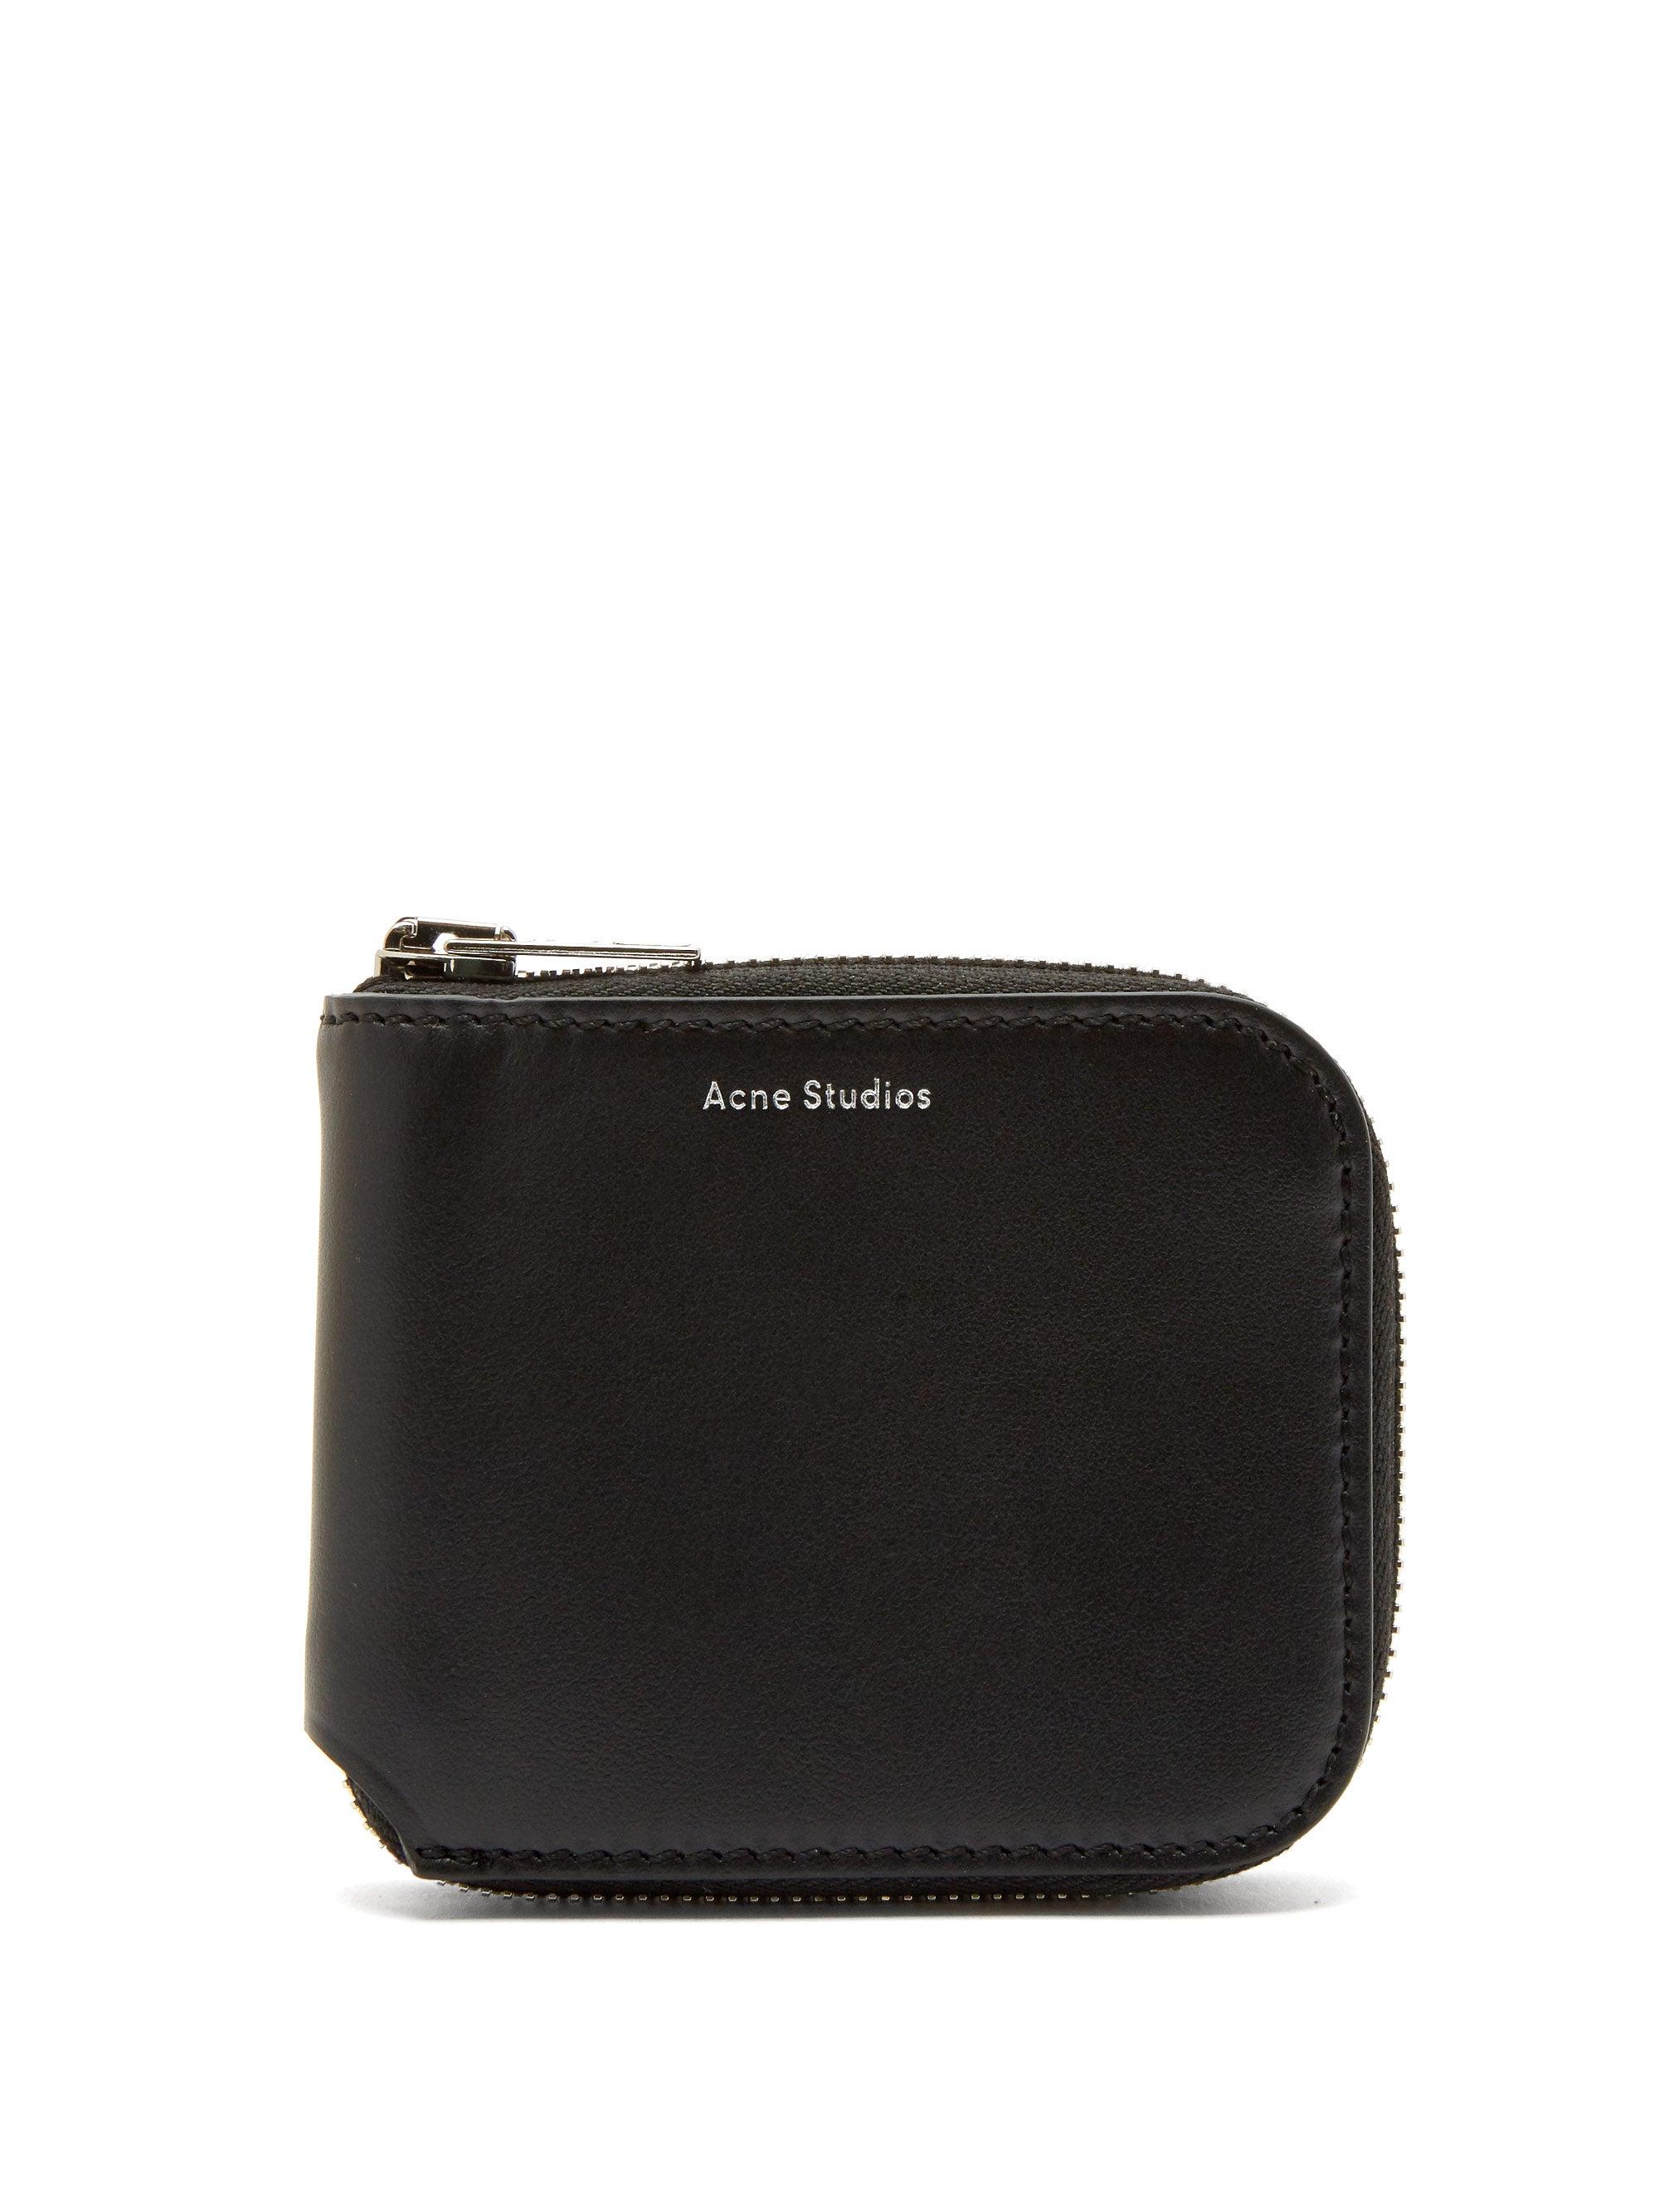 Acne Studios Kei S Leather Zip-around Wallet in Black - Save 72% - Lyst